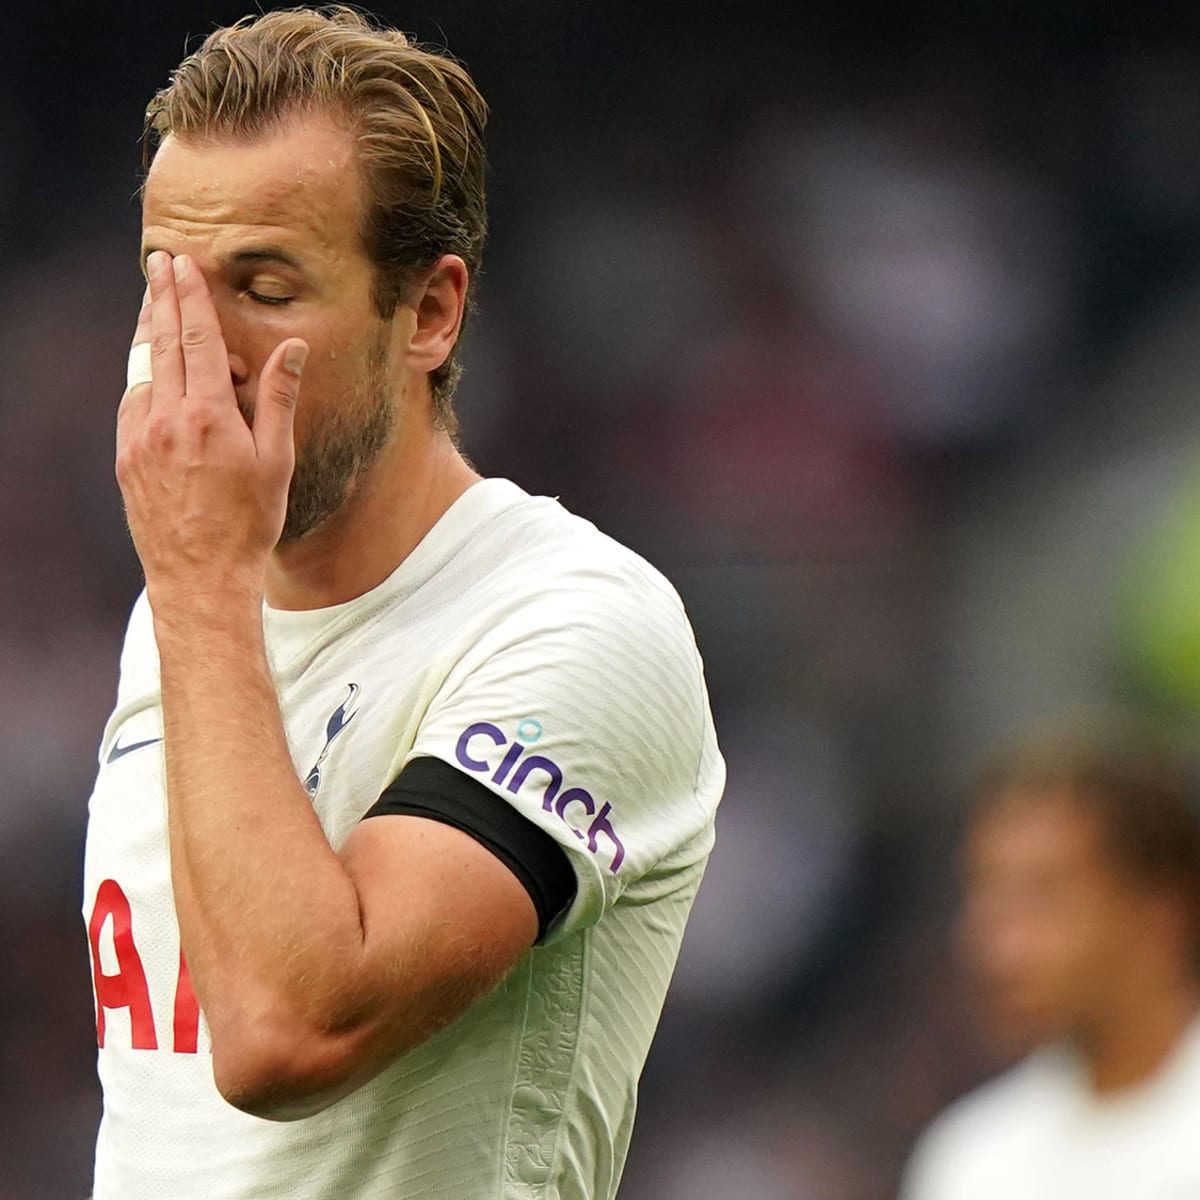 Moura, Kane, Son give Tottenham 3-0 win over Crystal Palace